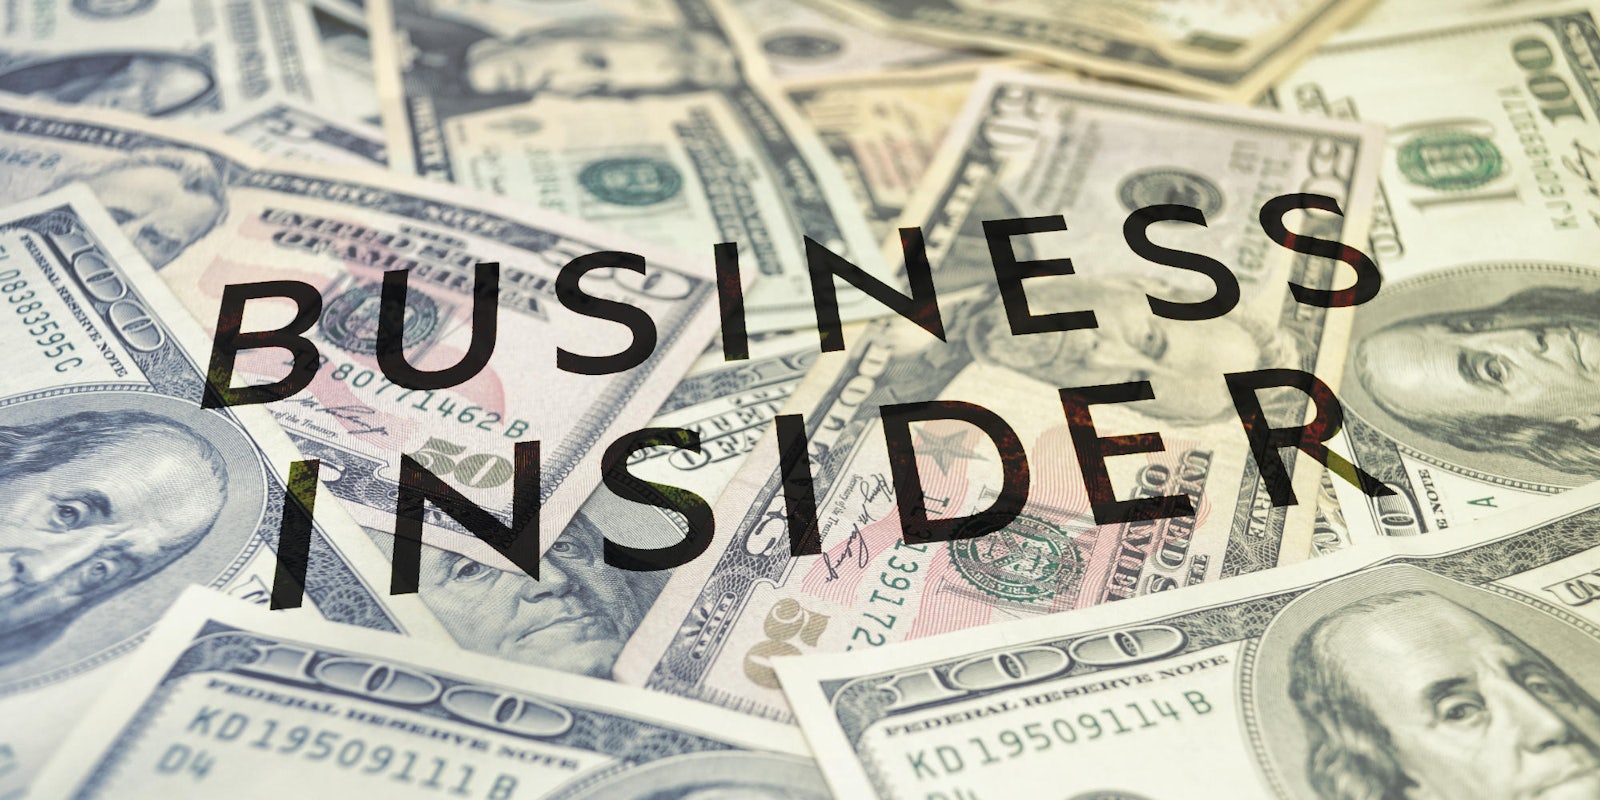 dollar bills with the Business Insider logo on them